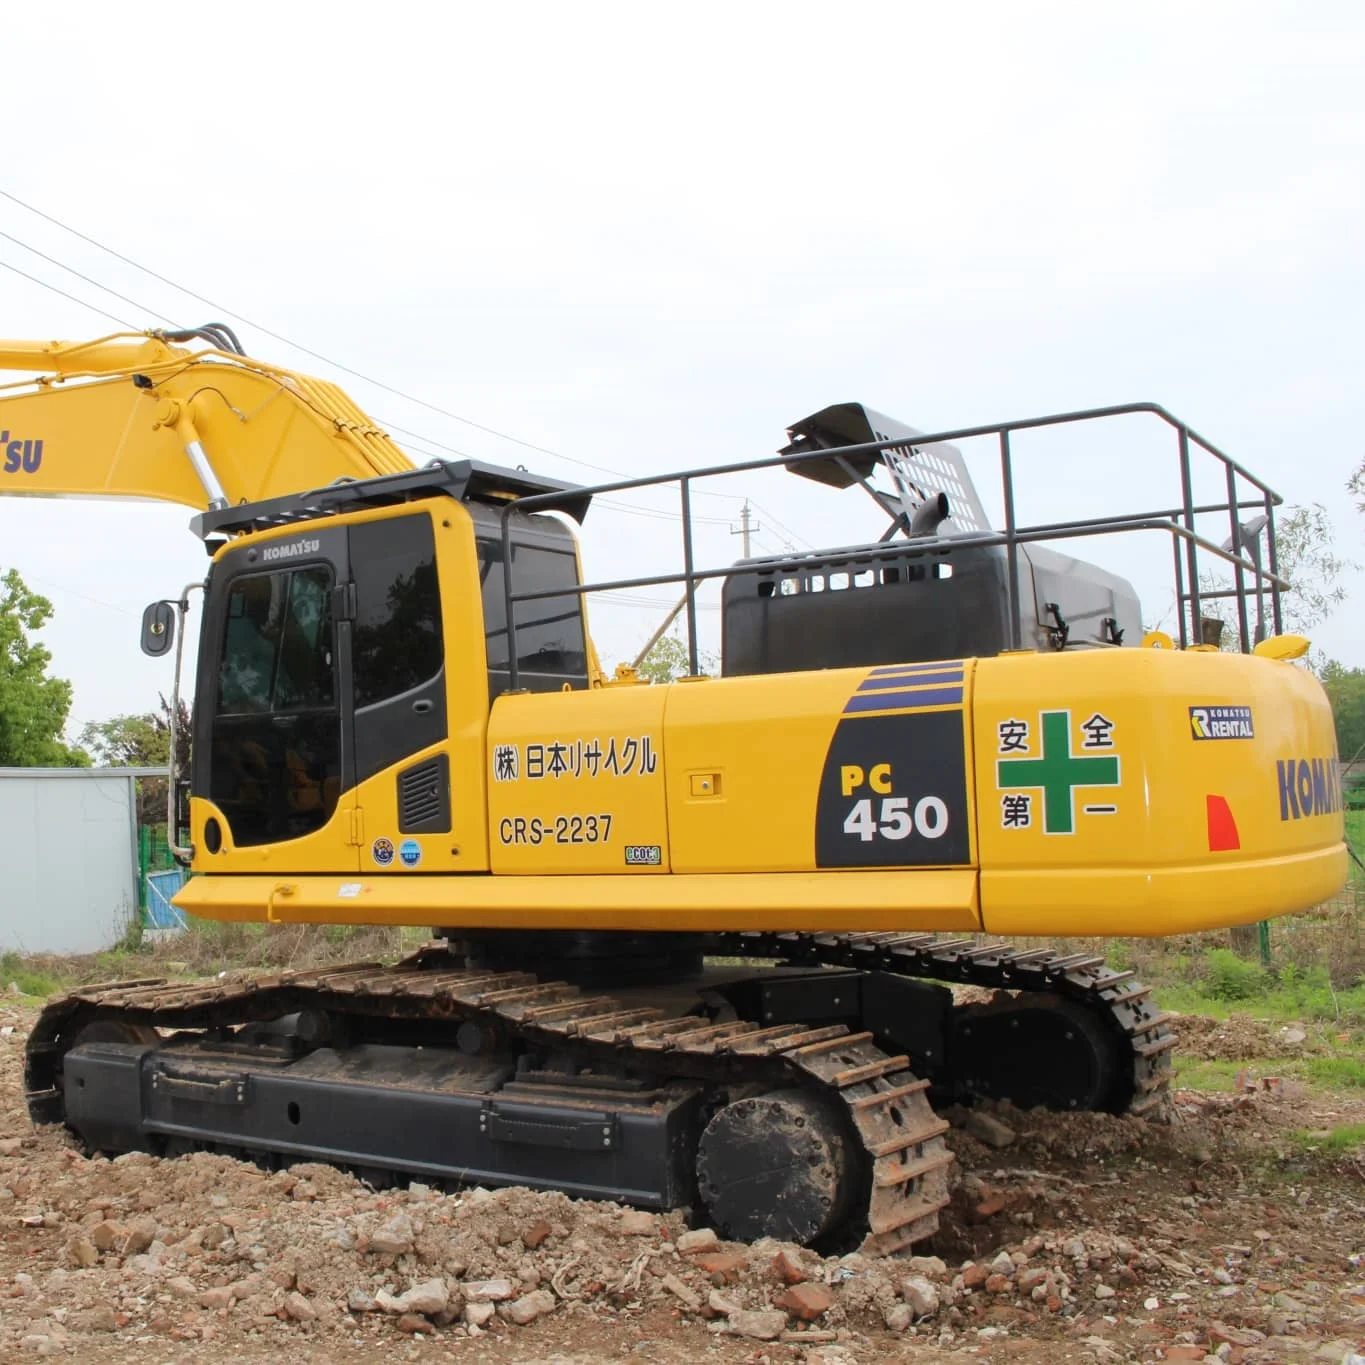 USED KOMATSU 450 excavator manufacture